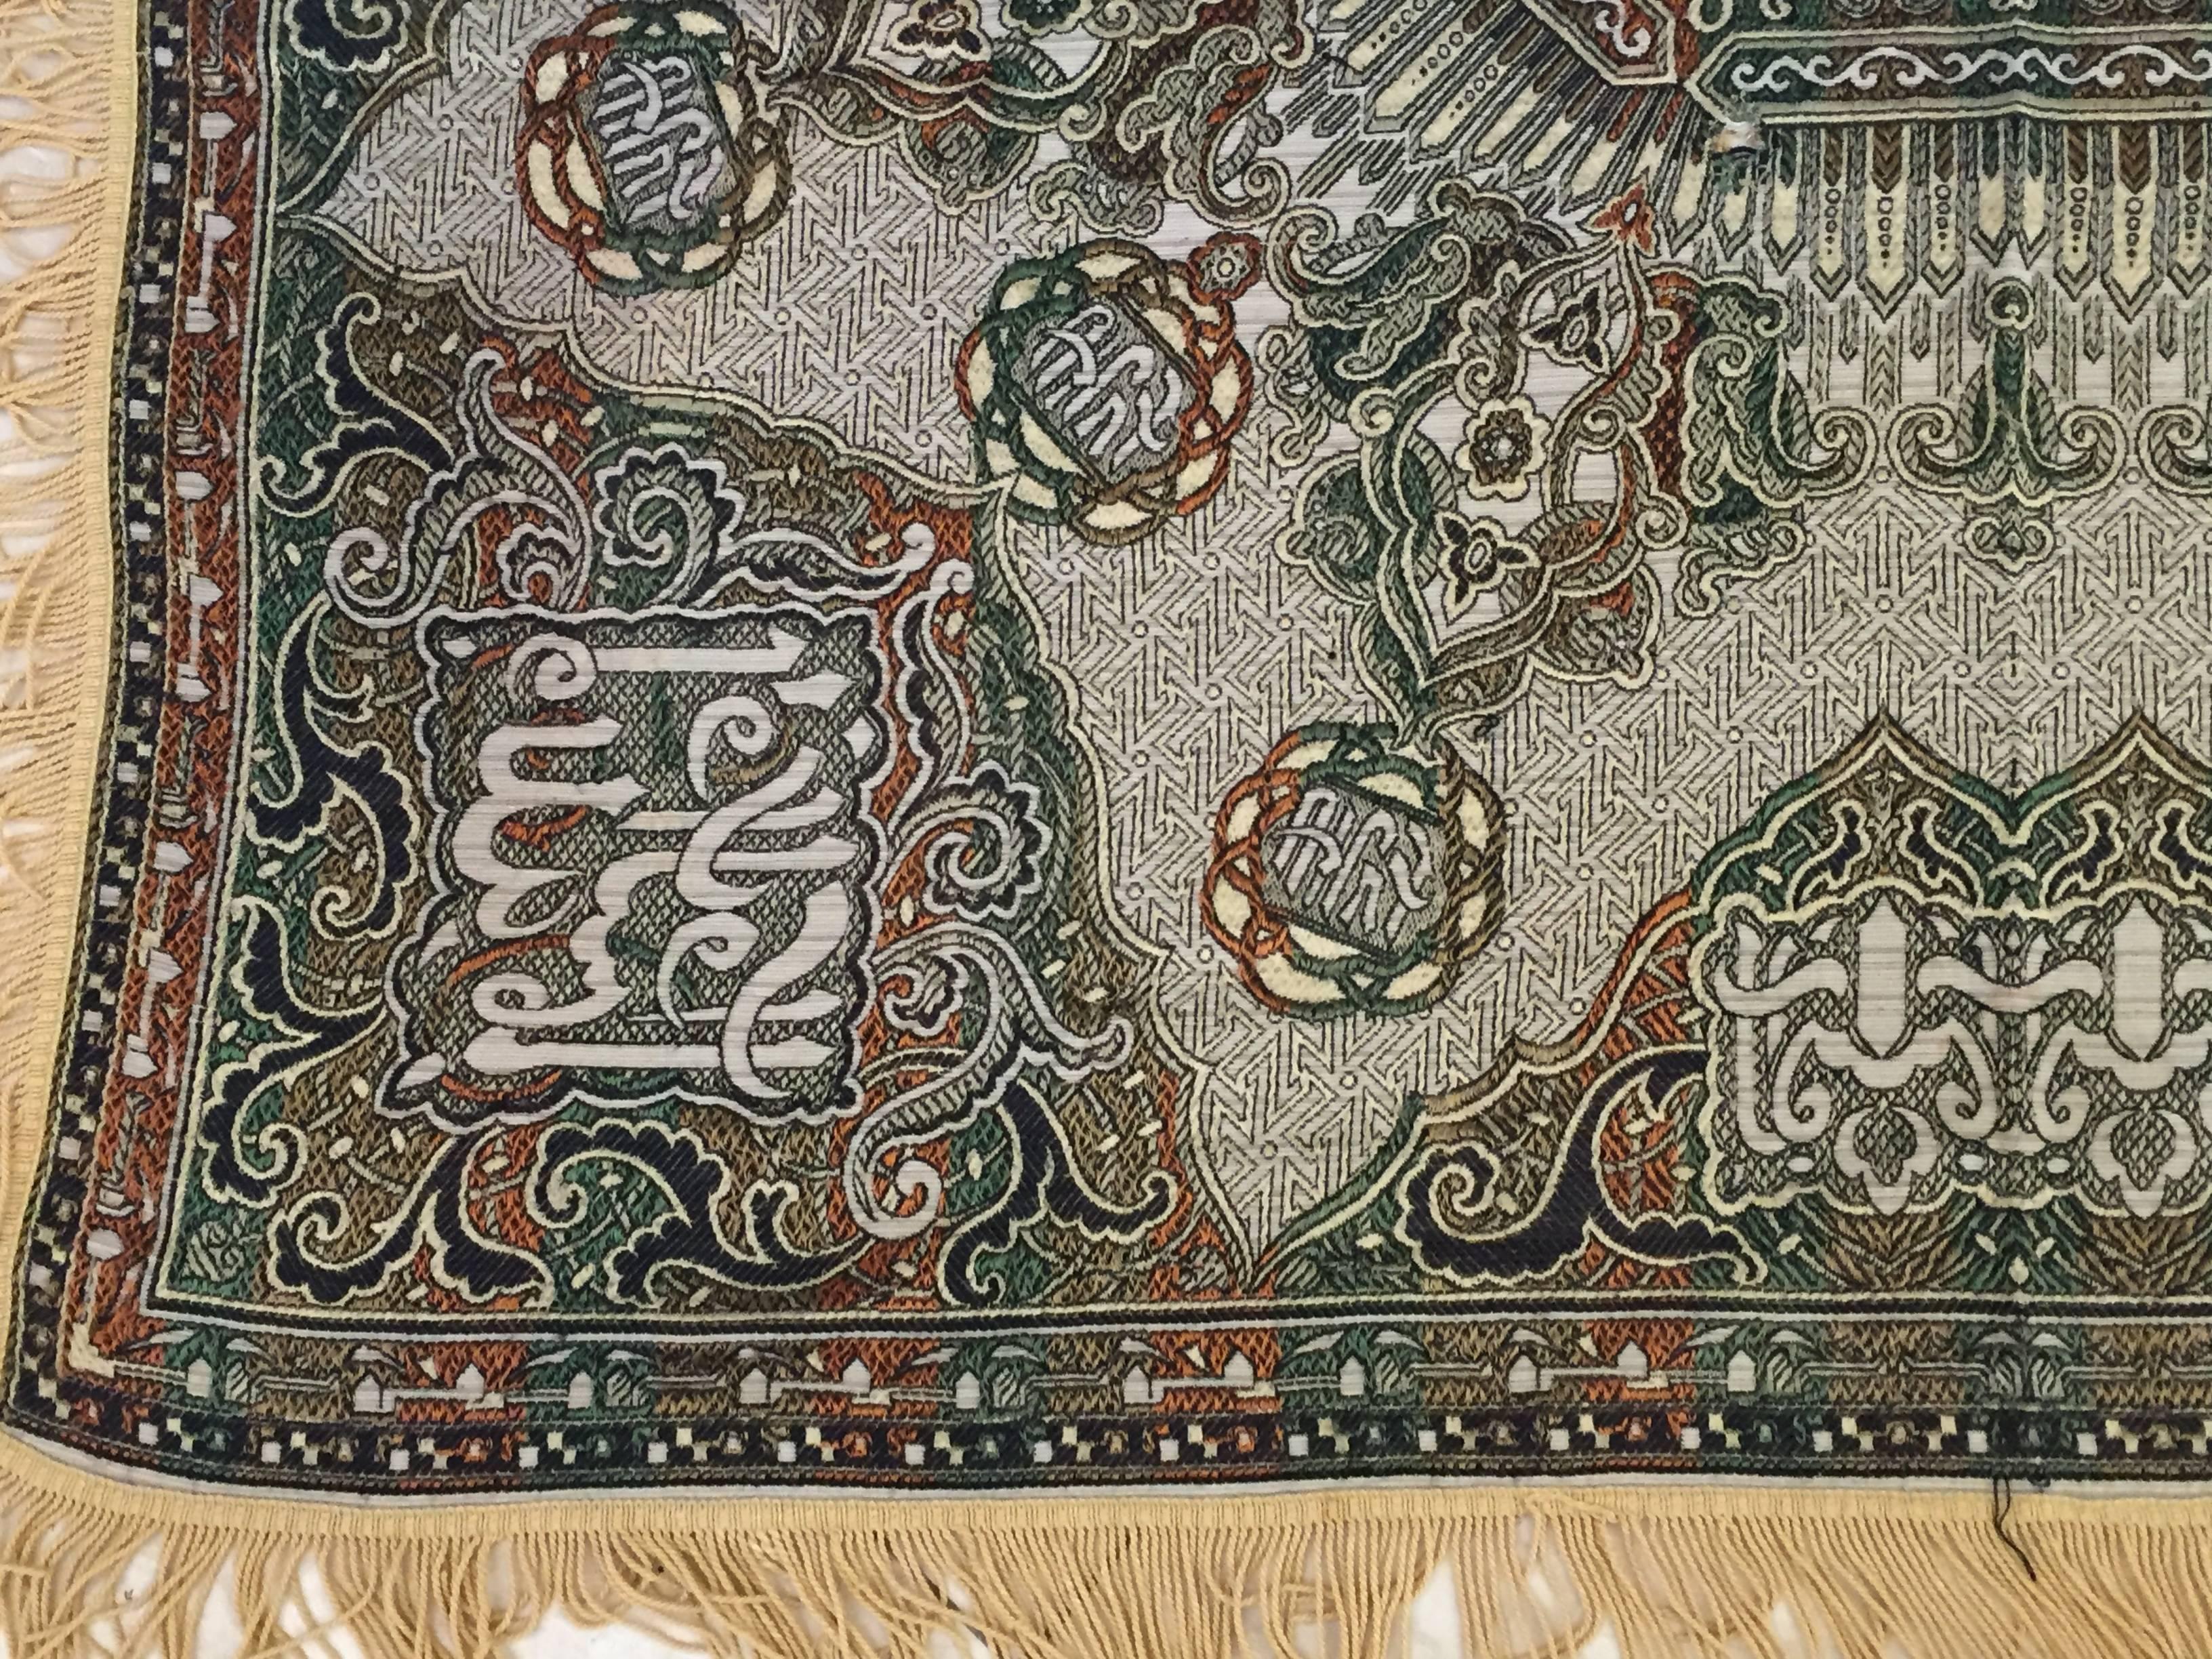 Granada Islamic Spain Textile with Moorish Calligraphy Writing 3